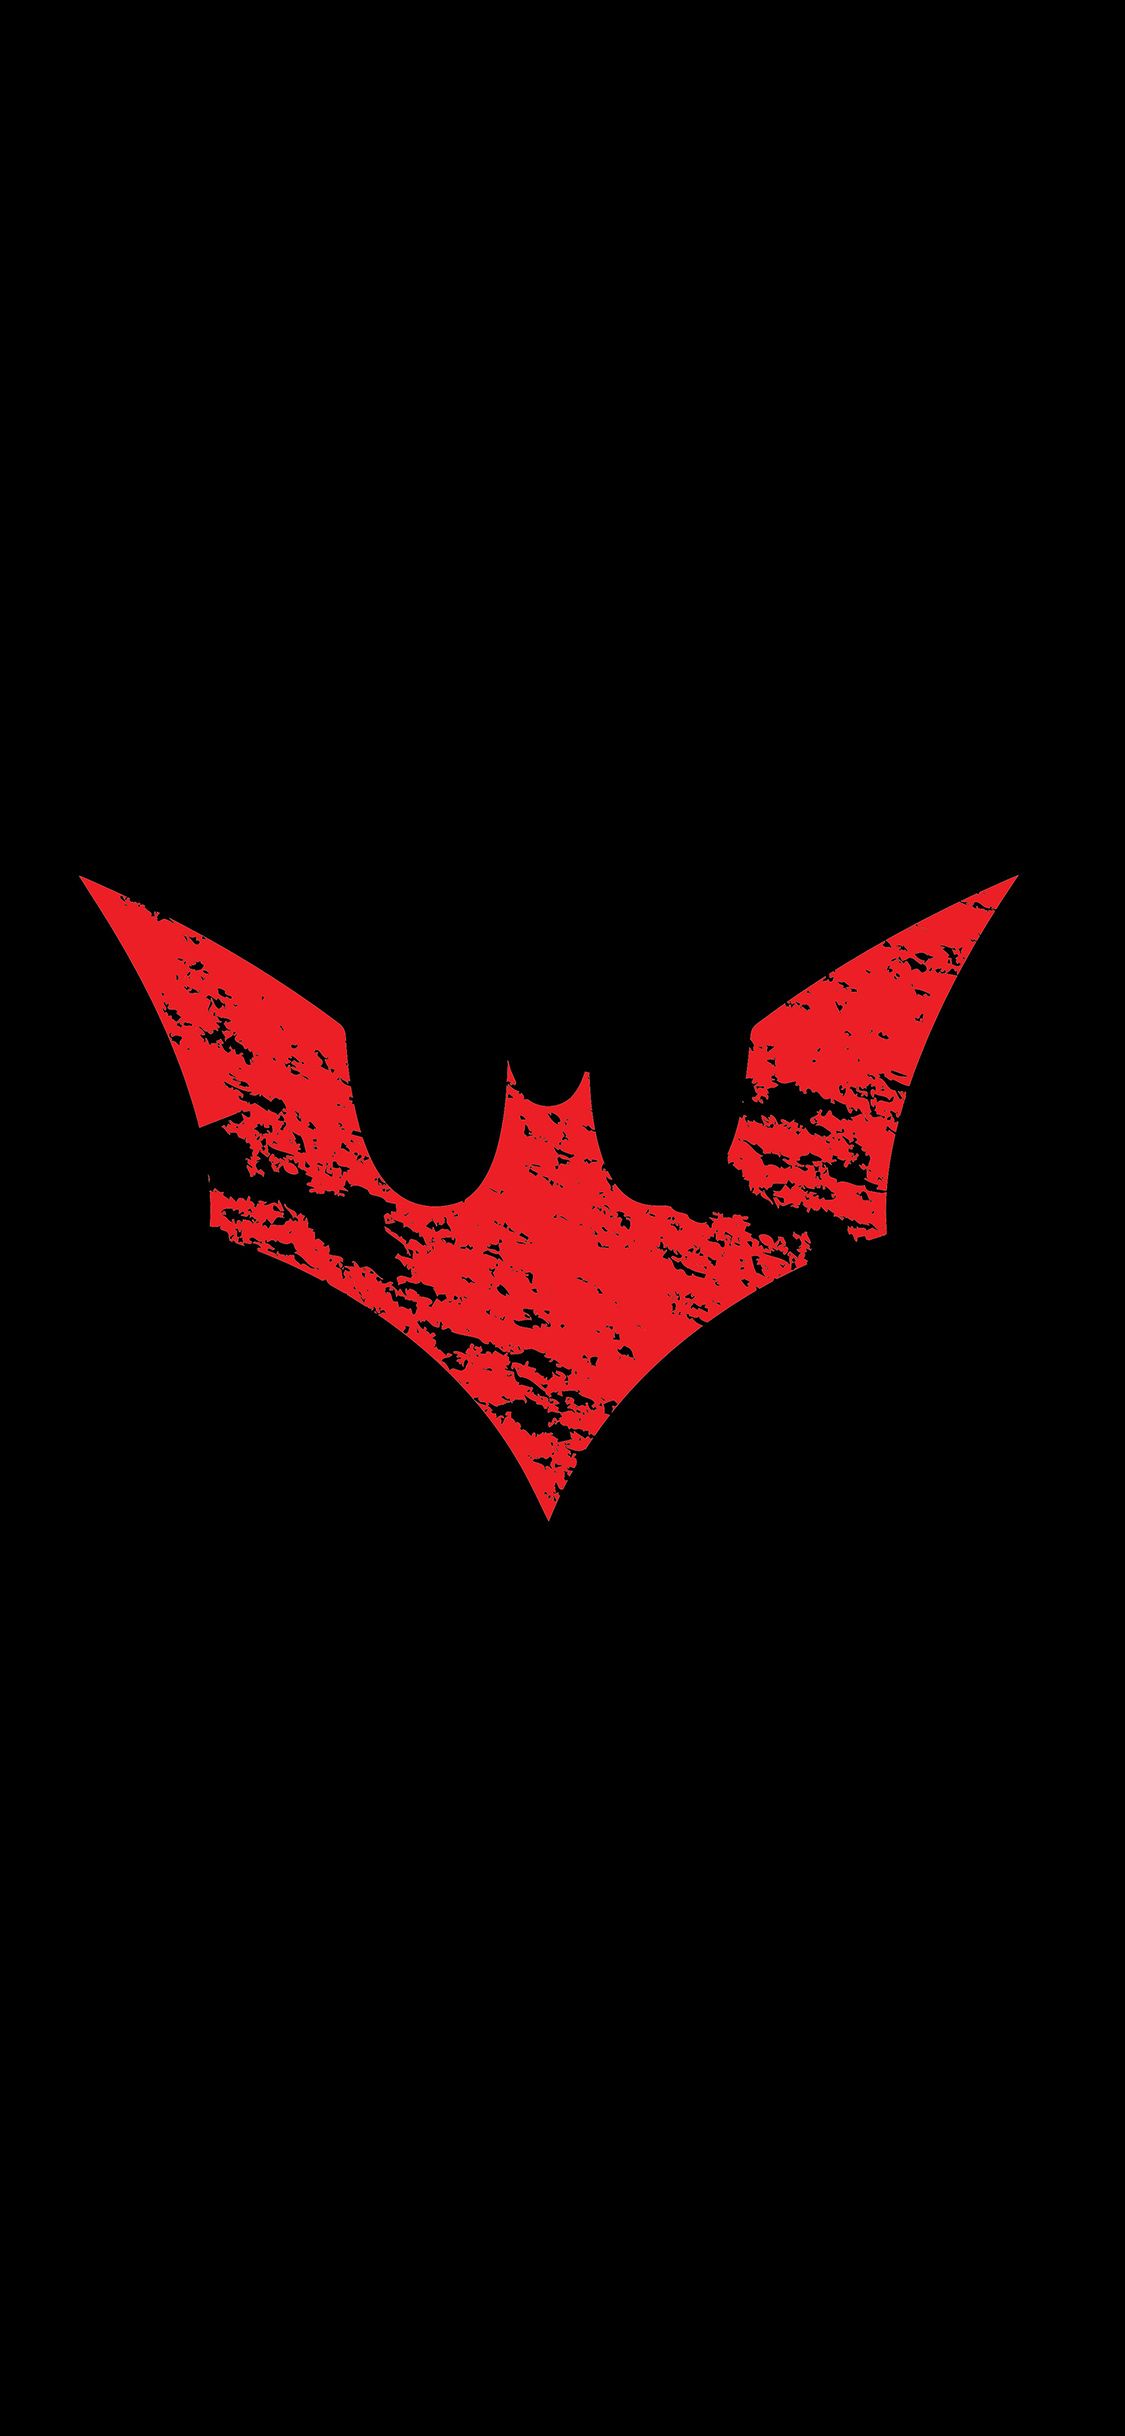 iPhone wallpaper. batman logo red dark hero art